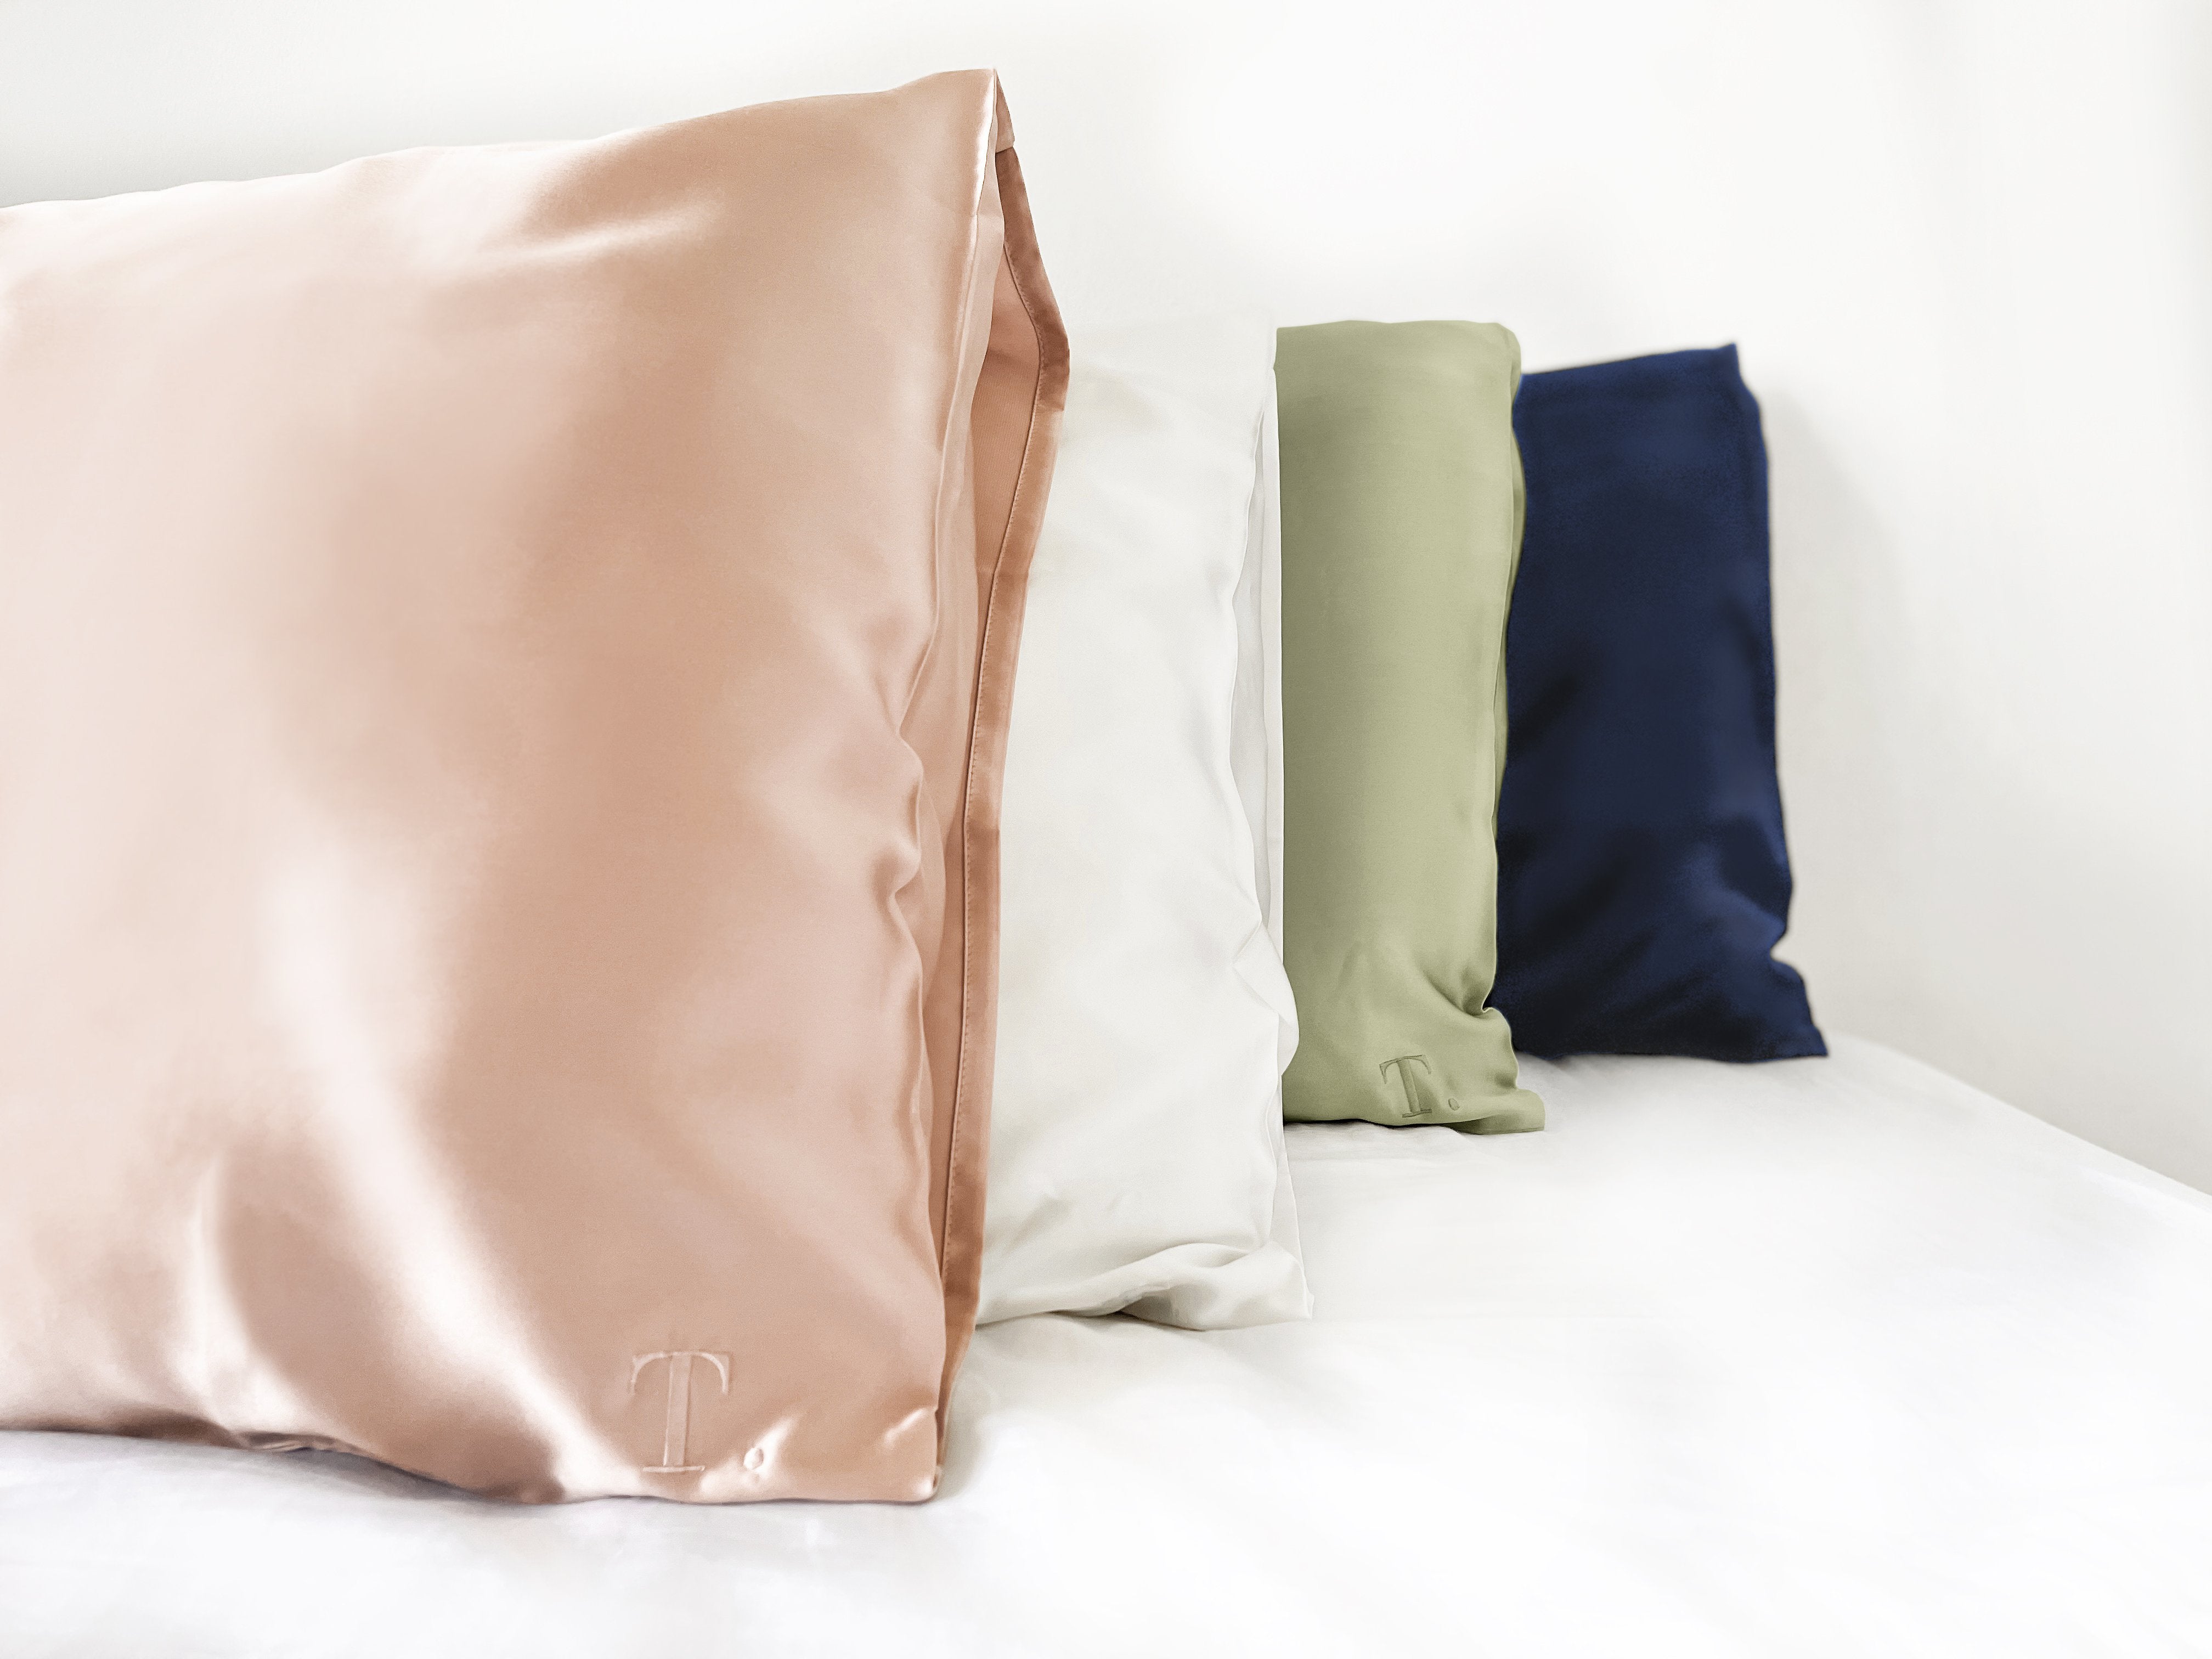 Tender Objects silk pillowcase